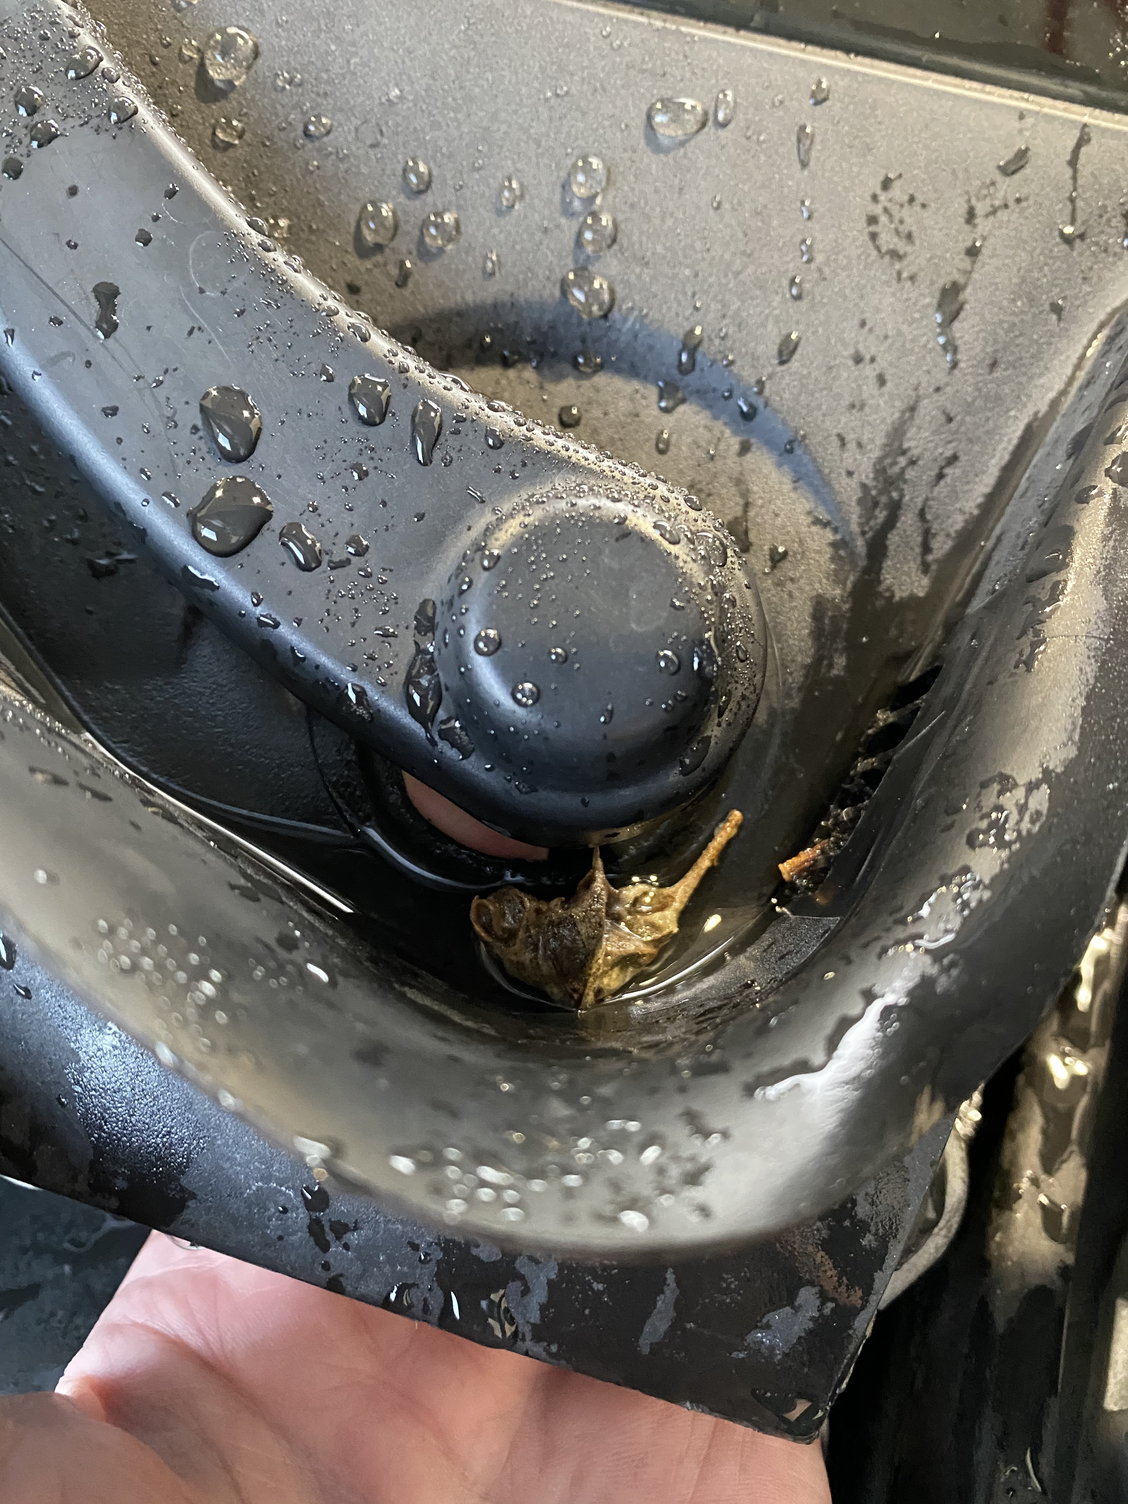 Is it safe using RainX in my Jeep? - Maintenance/Repairs - Car Talk